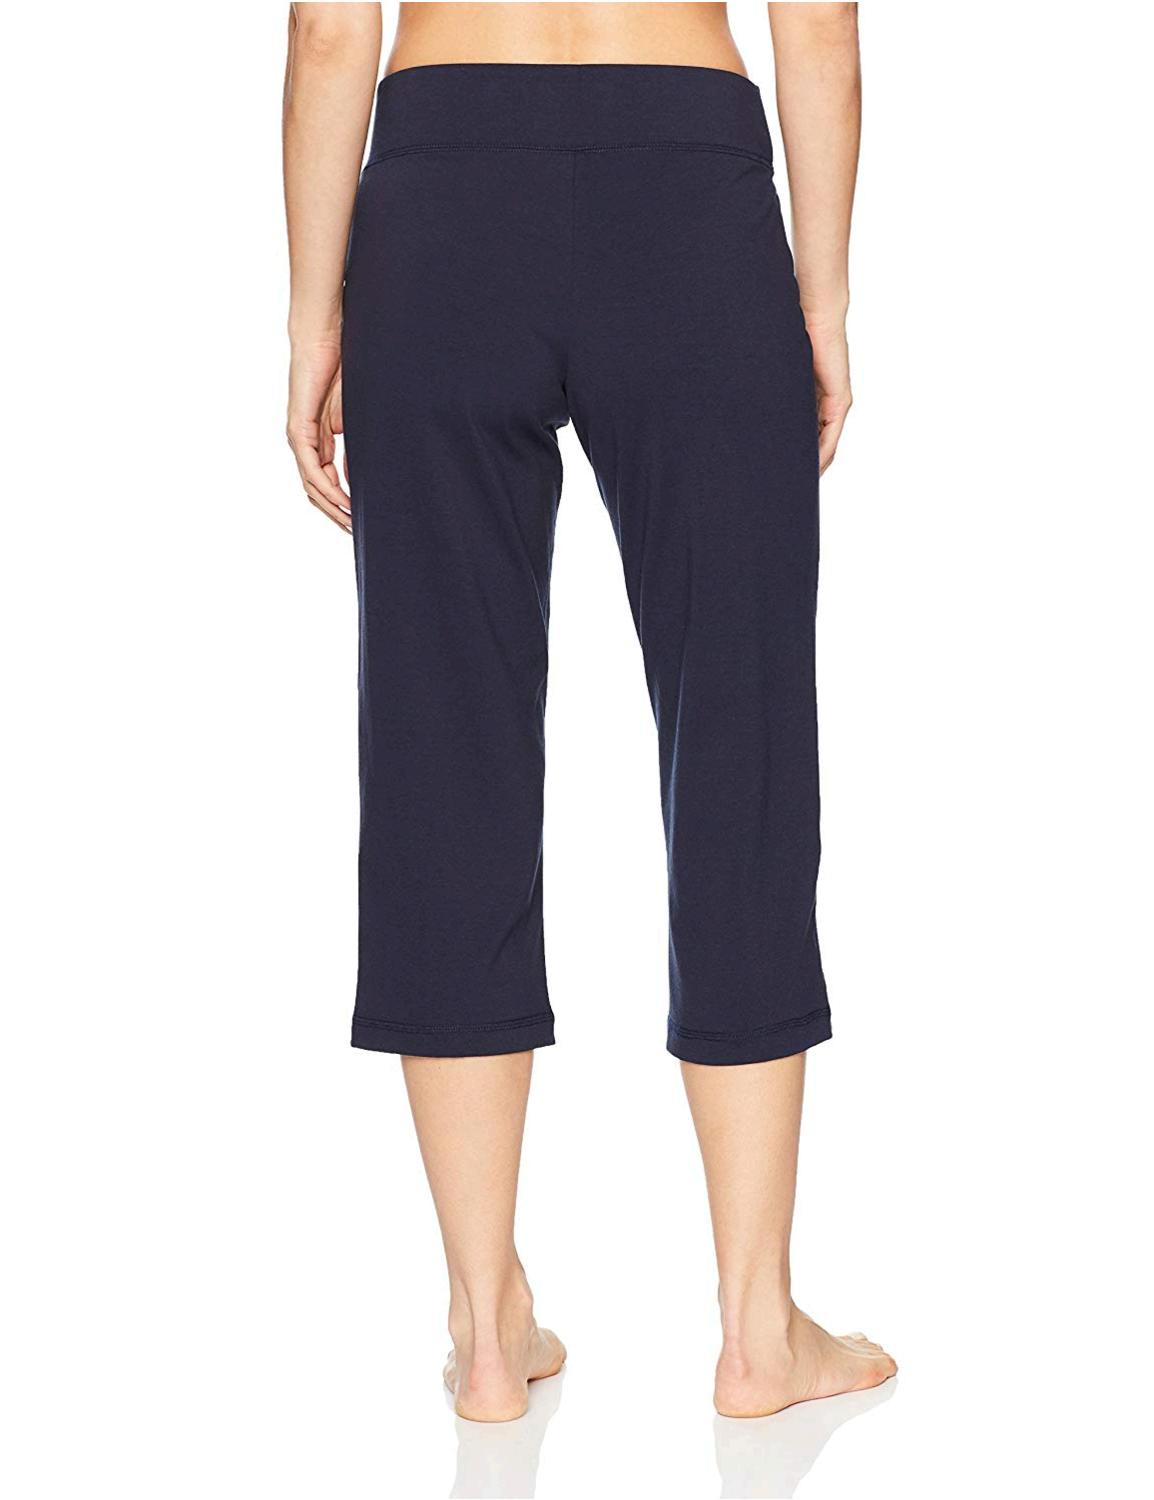 Danskin Women's Plus Size Sleek Fit Yoga Crop Pant,, Midnight Navy ...